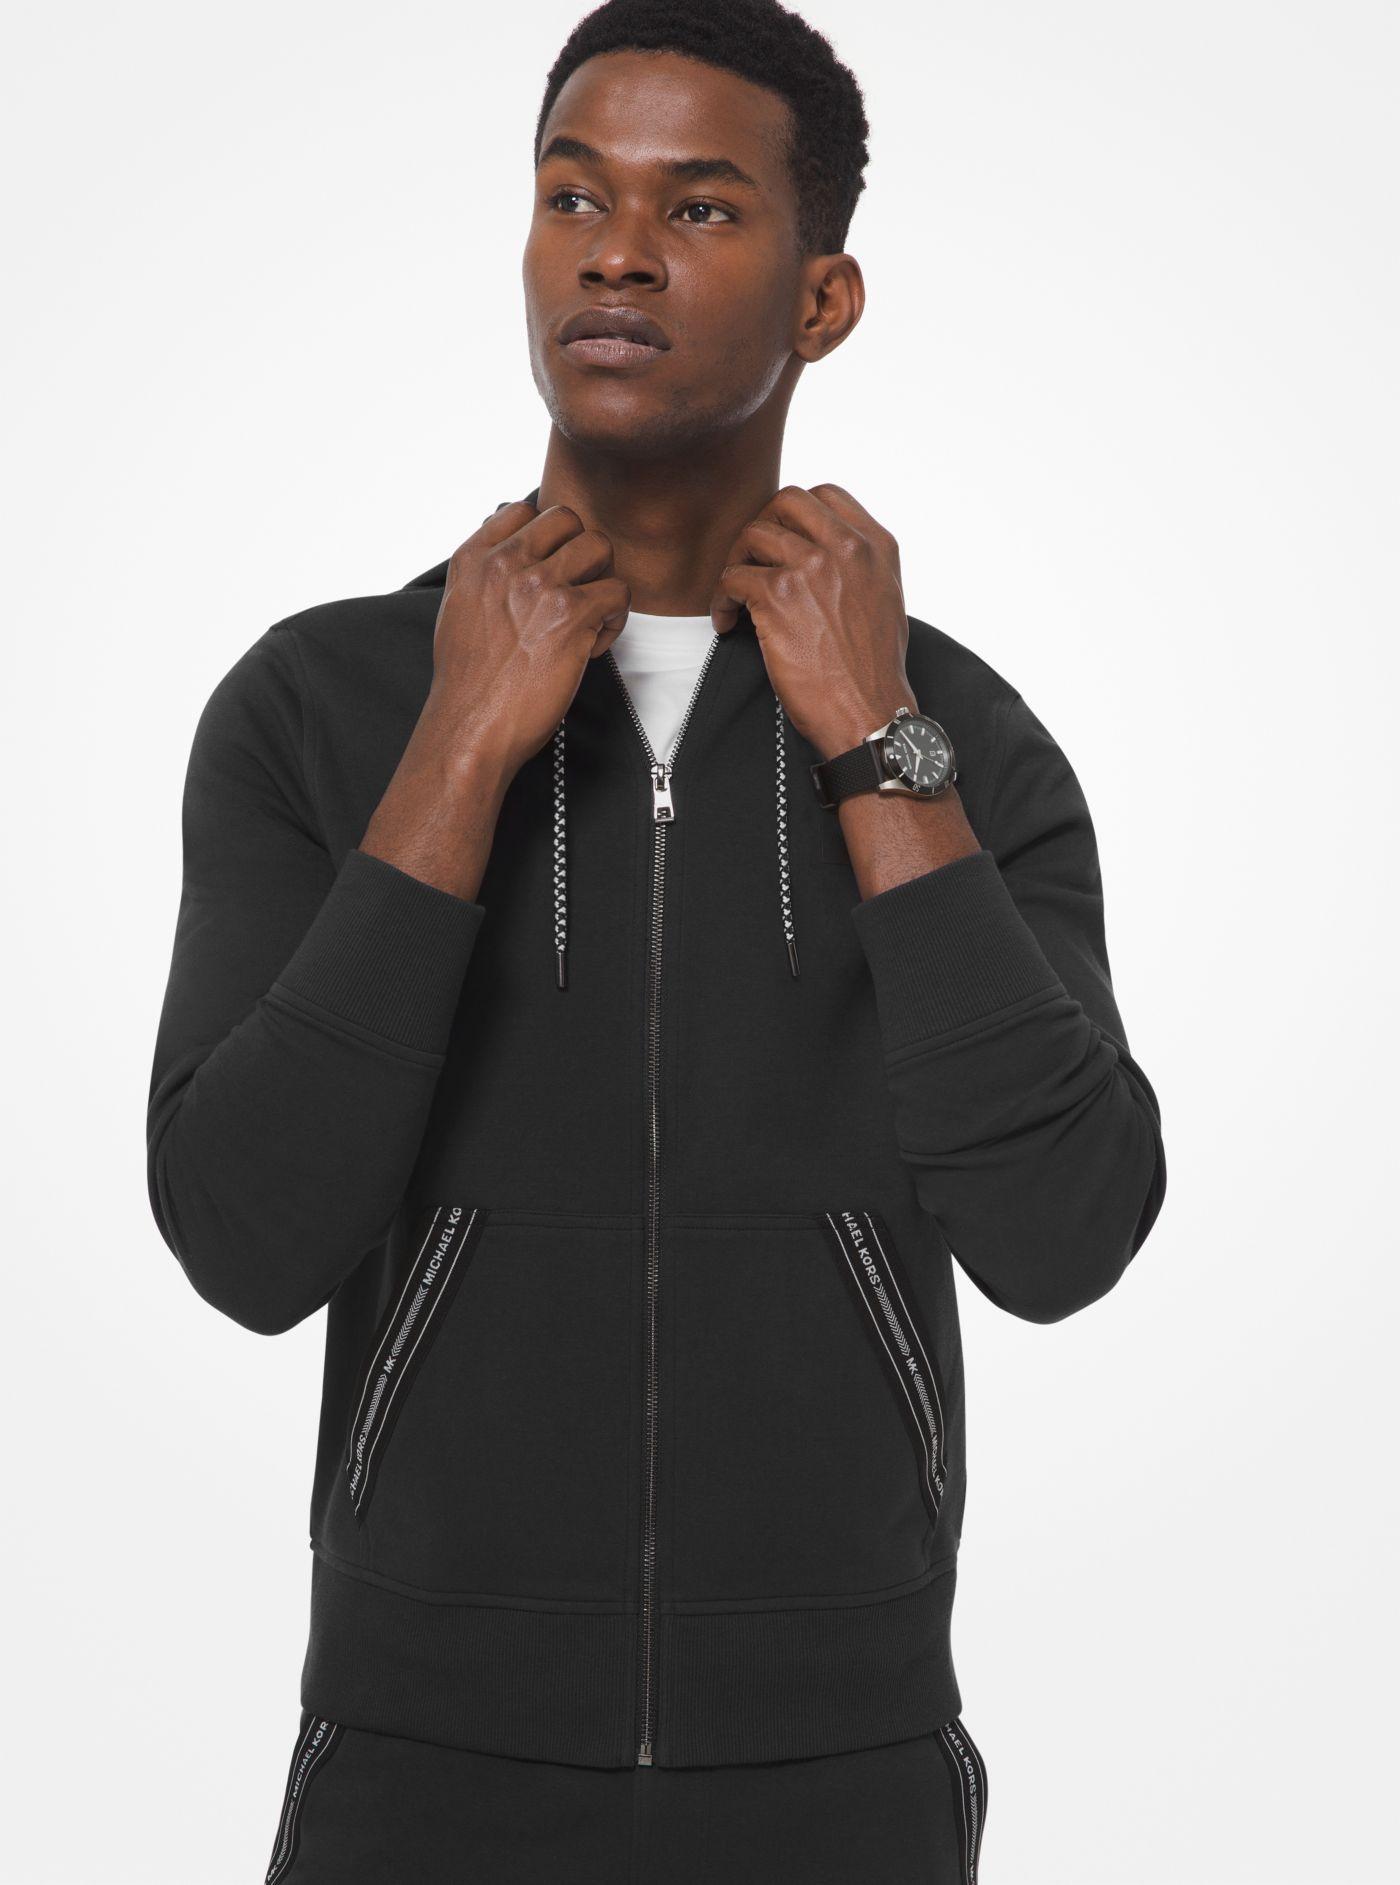 Michael Kors Logo Cotton Blend Zip-up Hoodie in Black for Men - Lyst